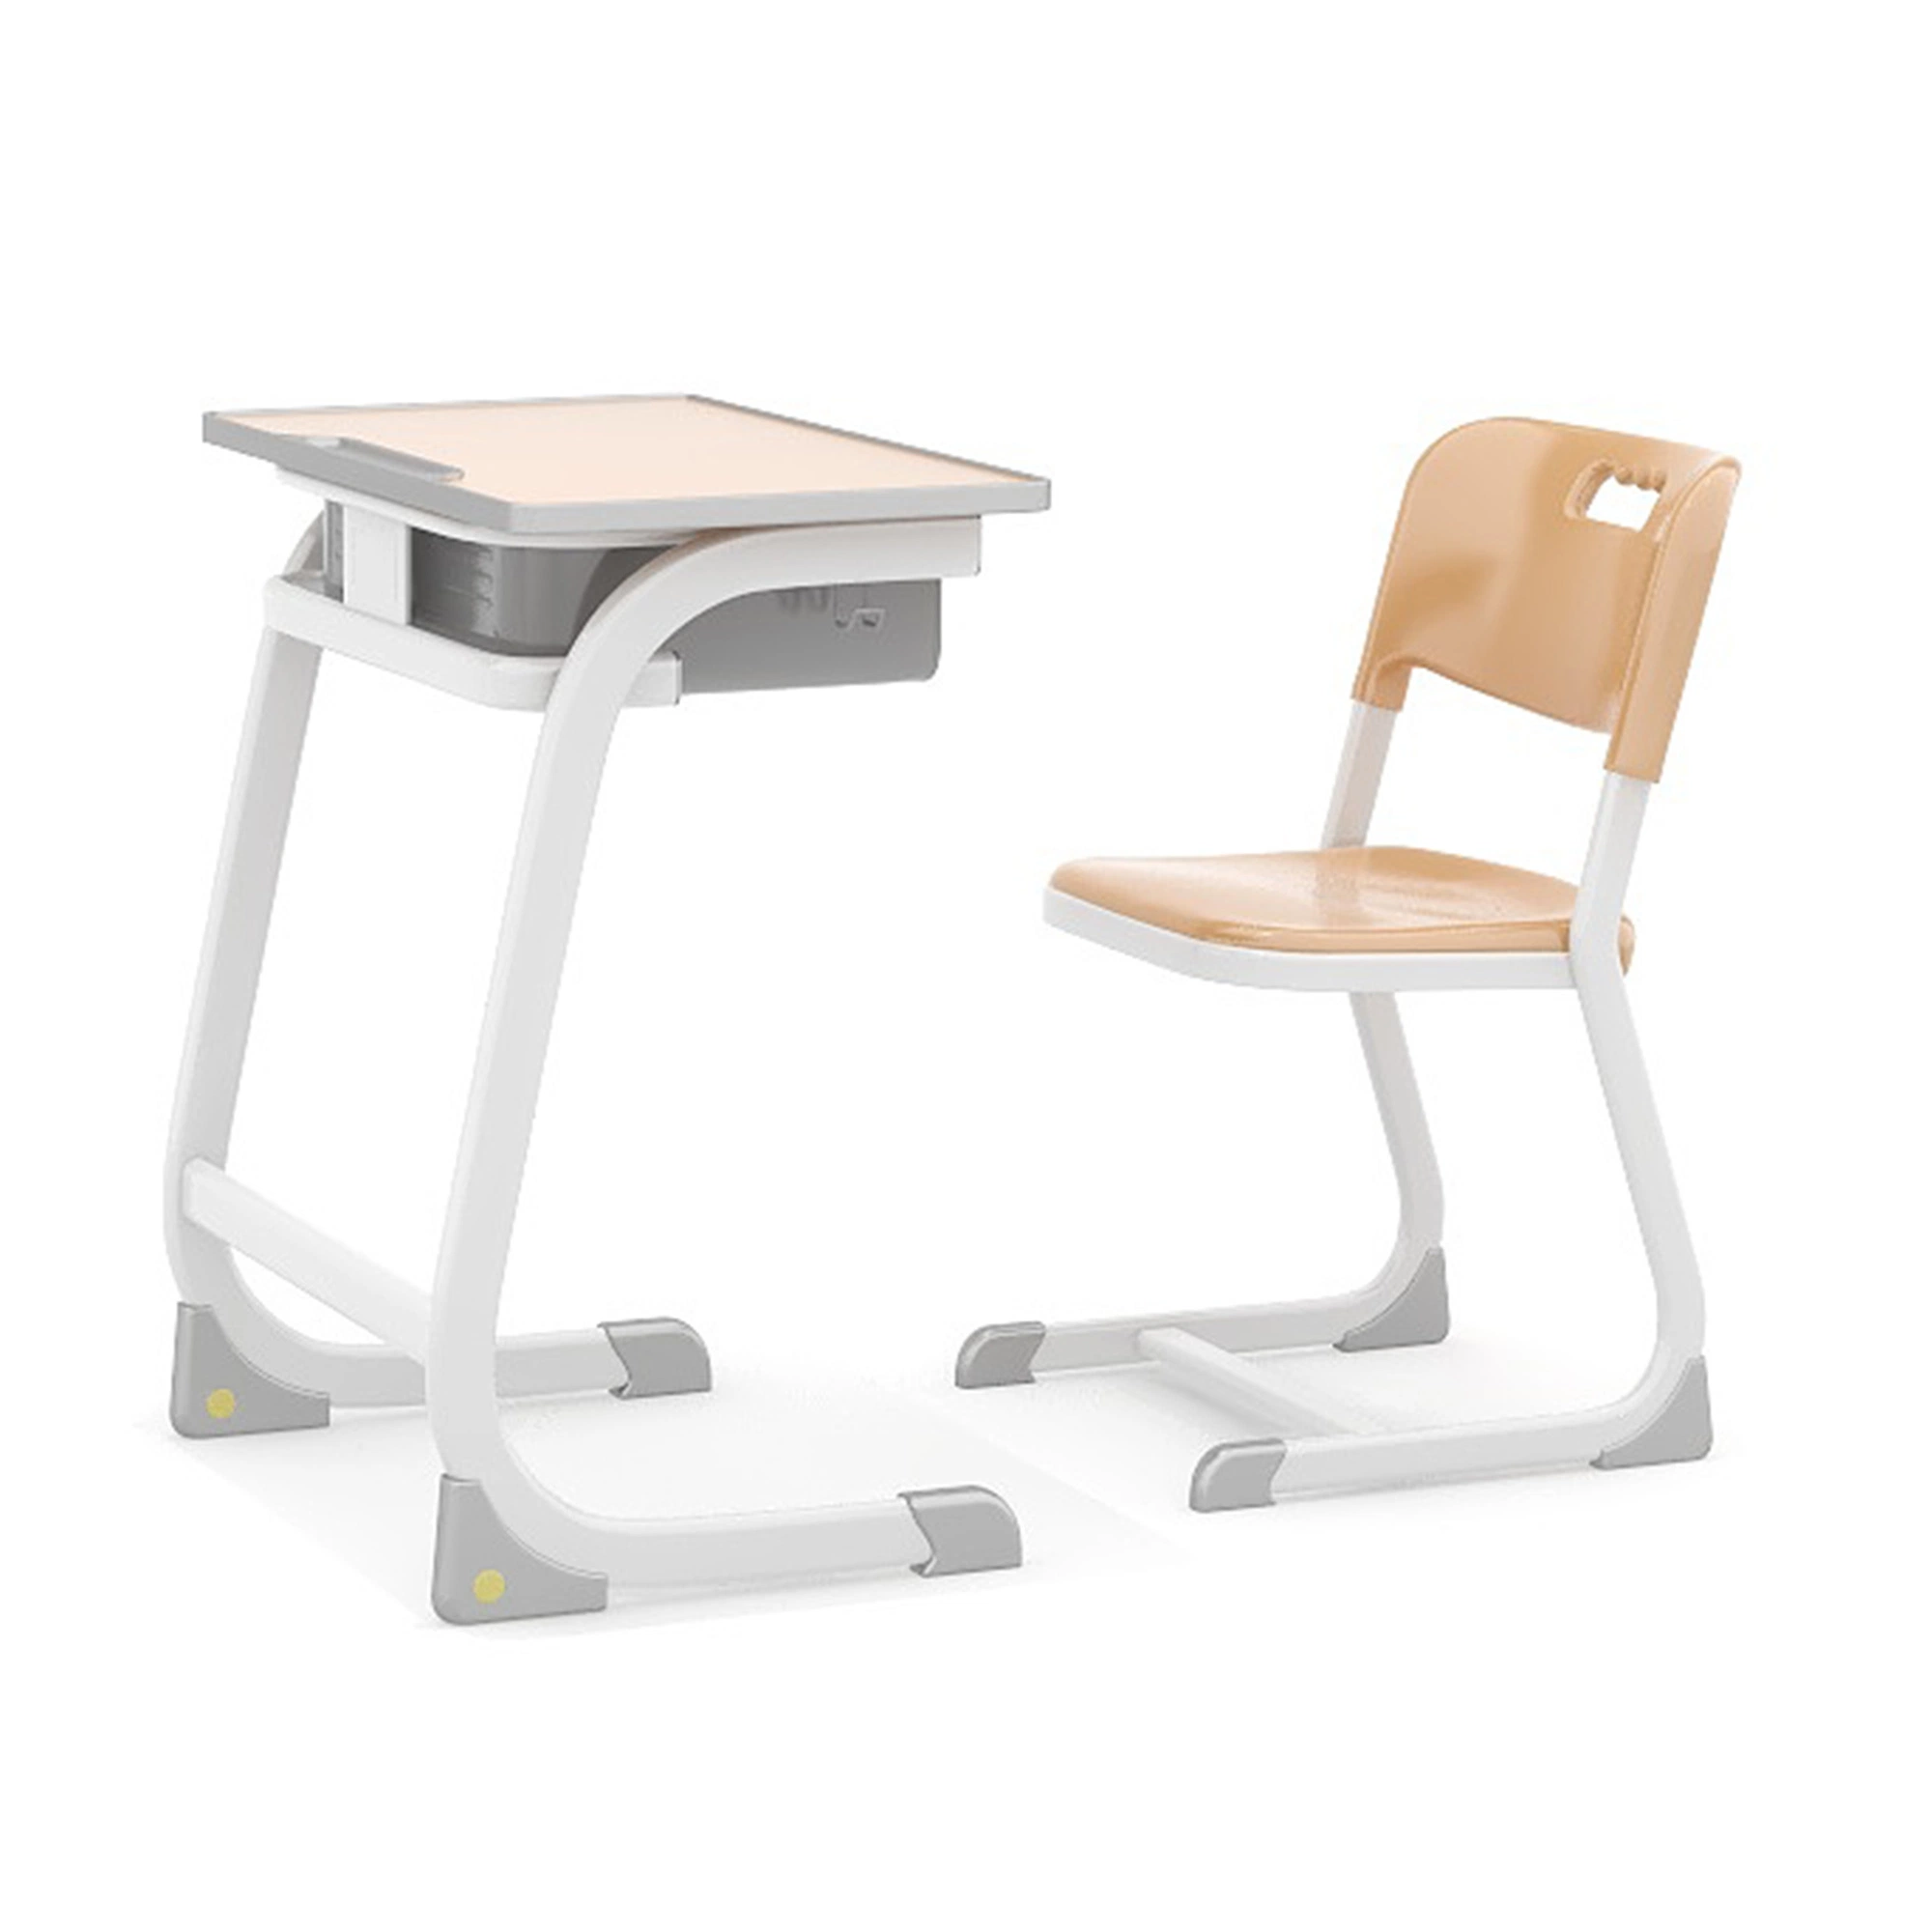 Metal Plastic Primary High School Children Classroom Seat Single Desk Chair Set